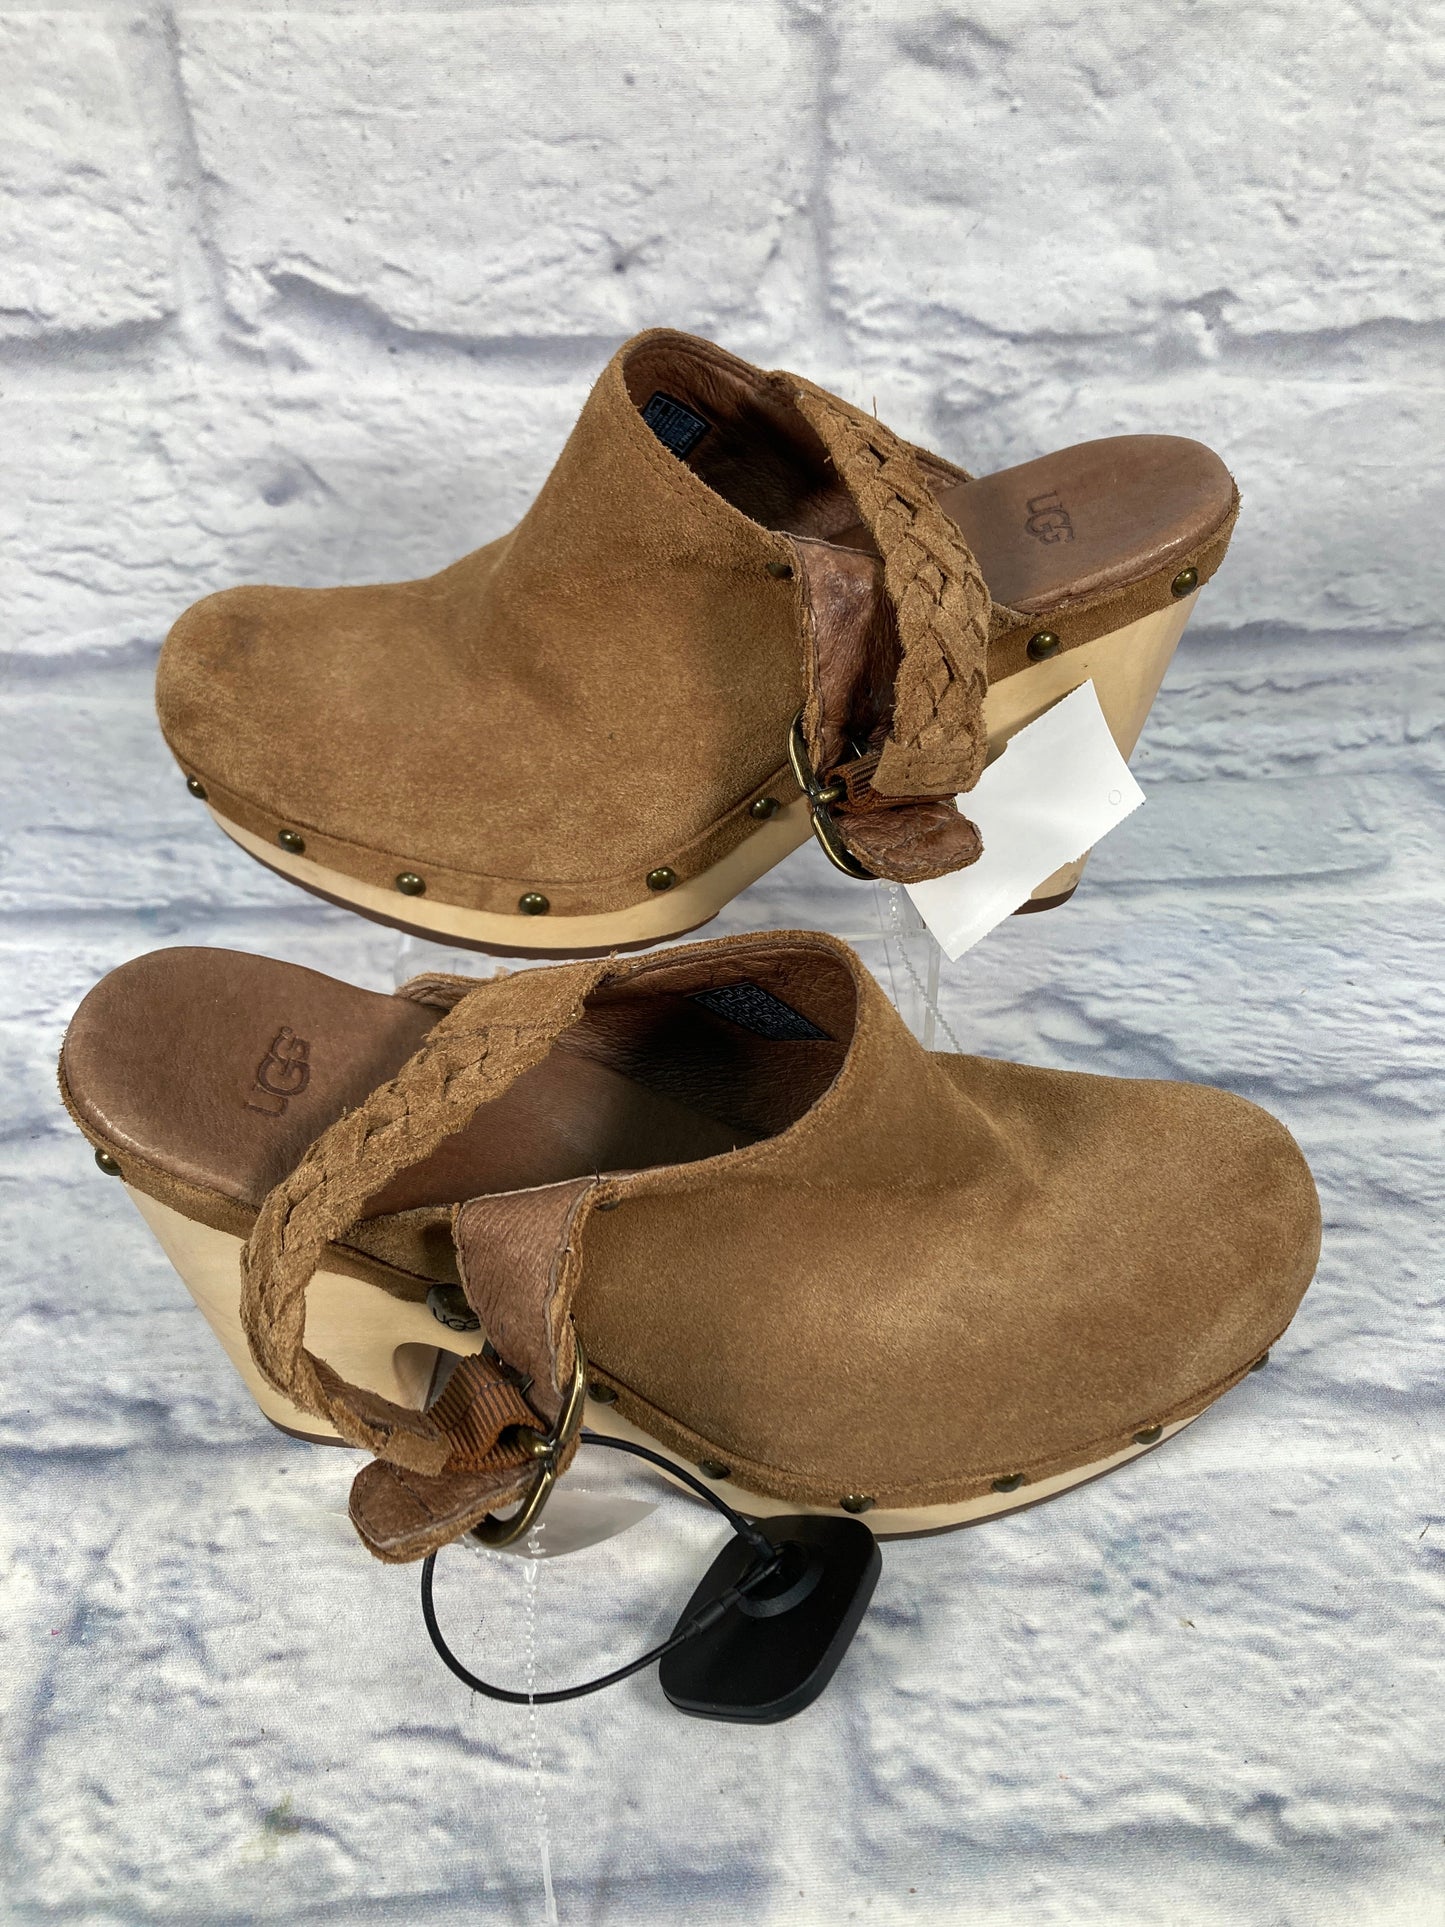 Brown Shoes Heels Block Ugg, Size 9